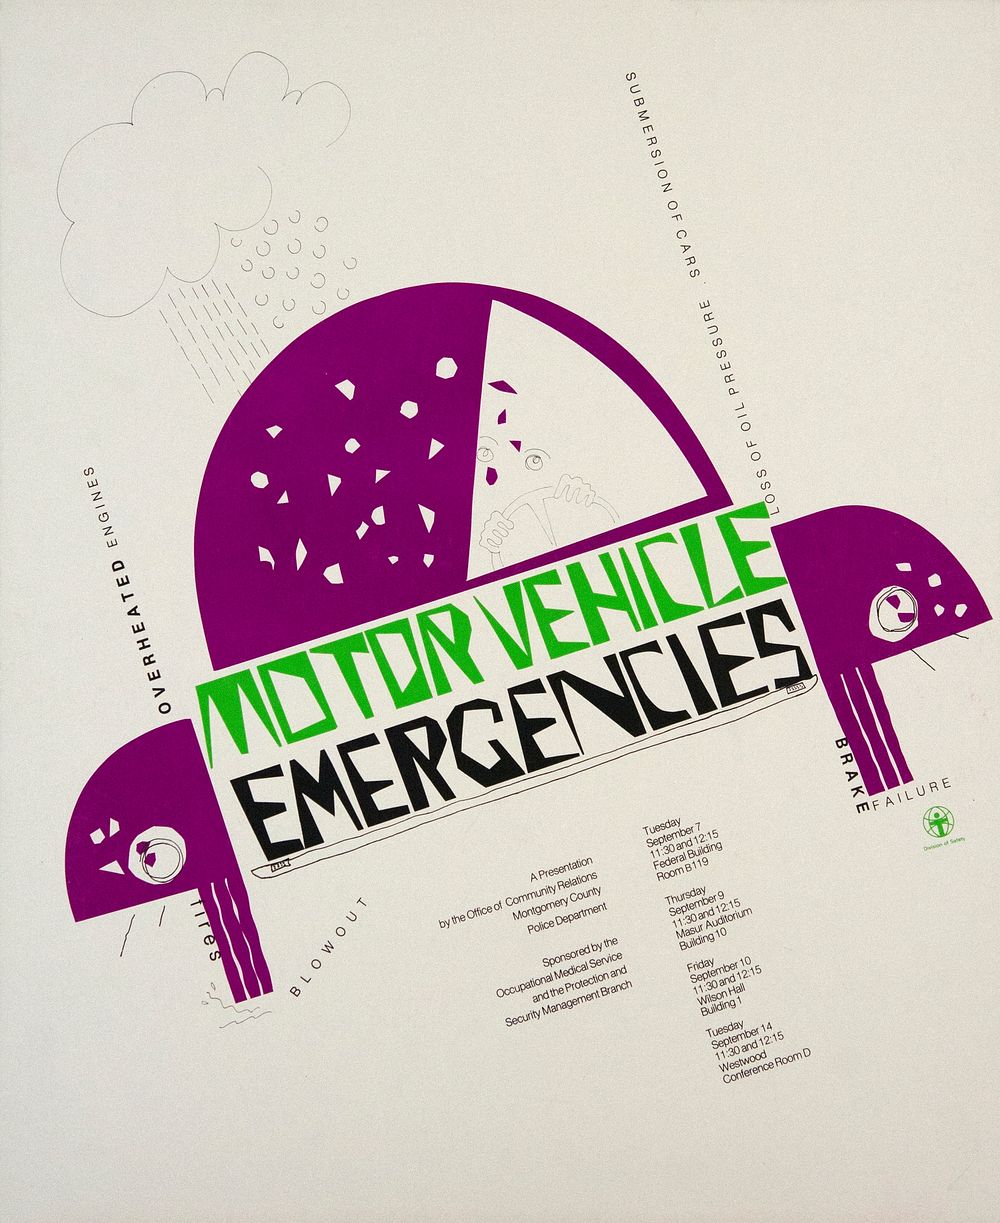 Motor Vehicle Emergencies. Original public domain image from Flickr